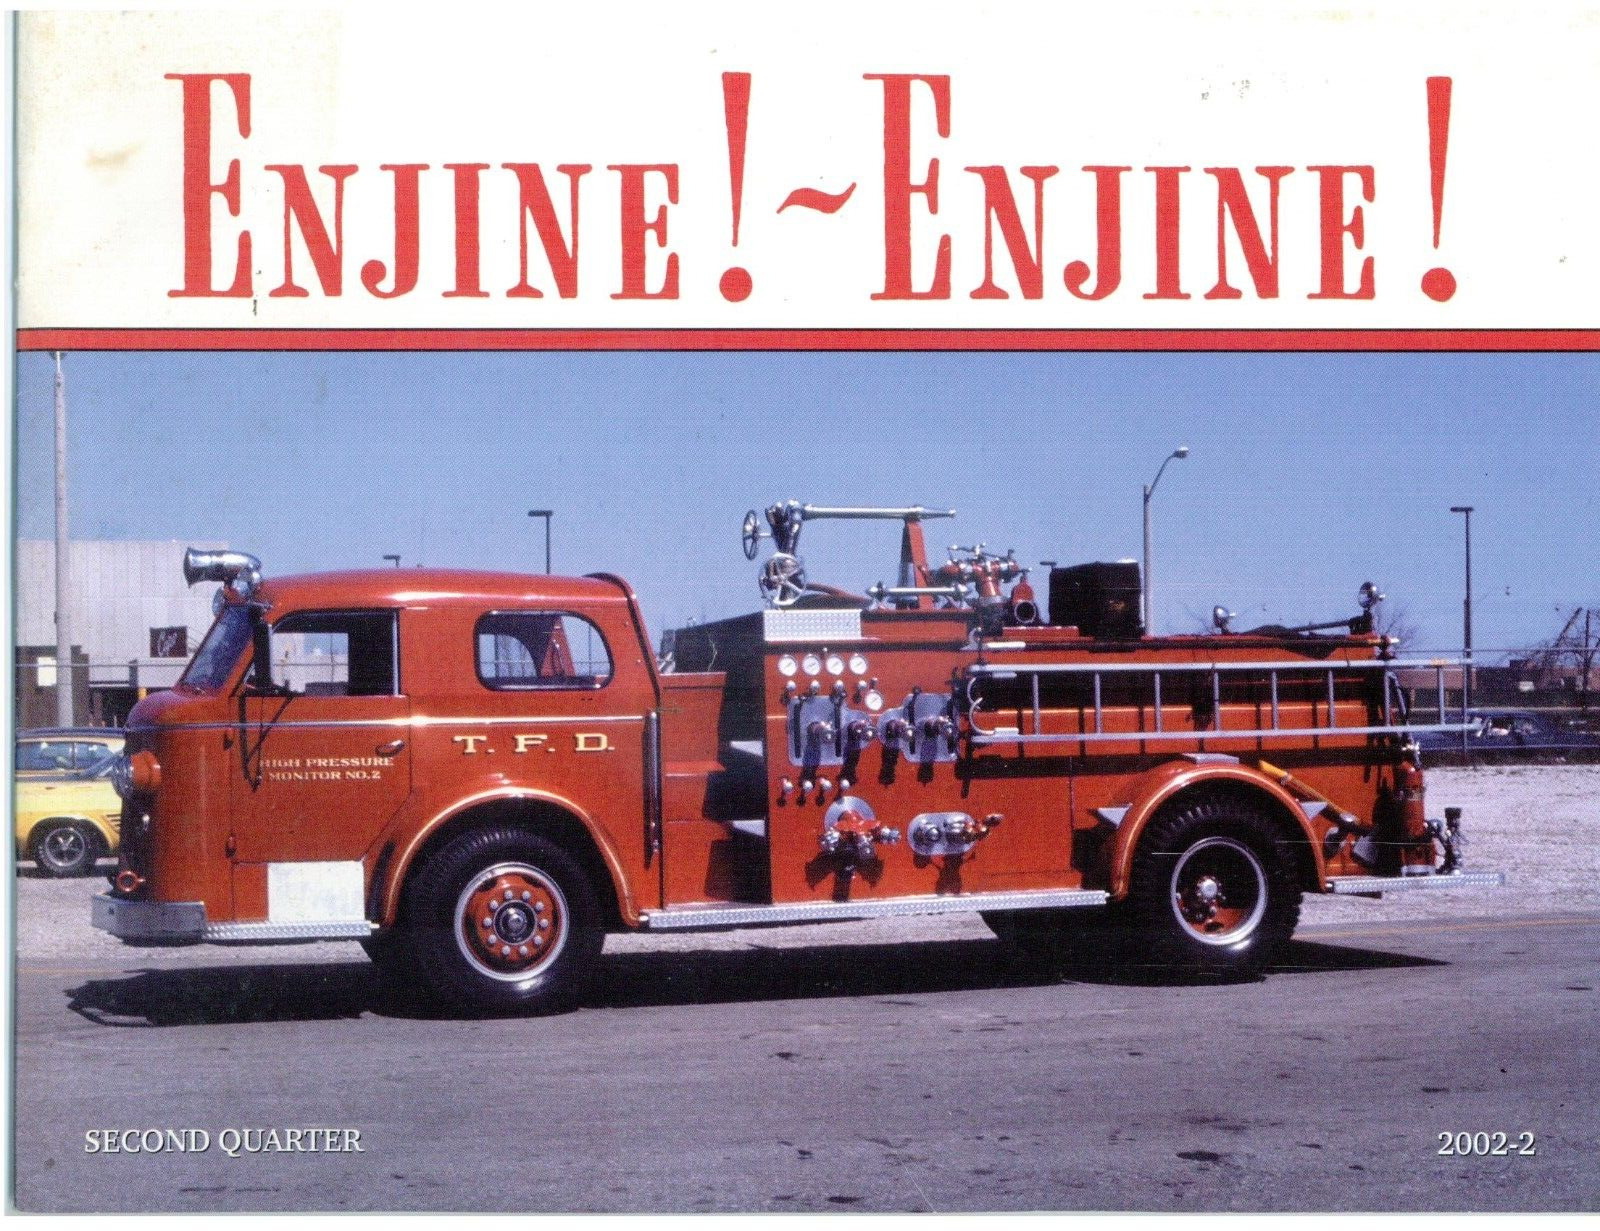 High Capacity Pumping Engine Fire Trucks – Q2 2002 Enjine Magazine